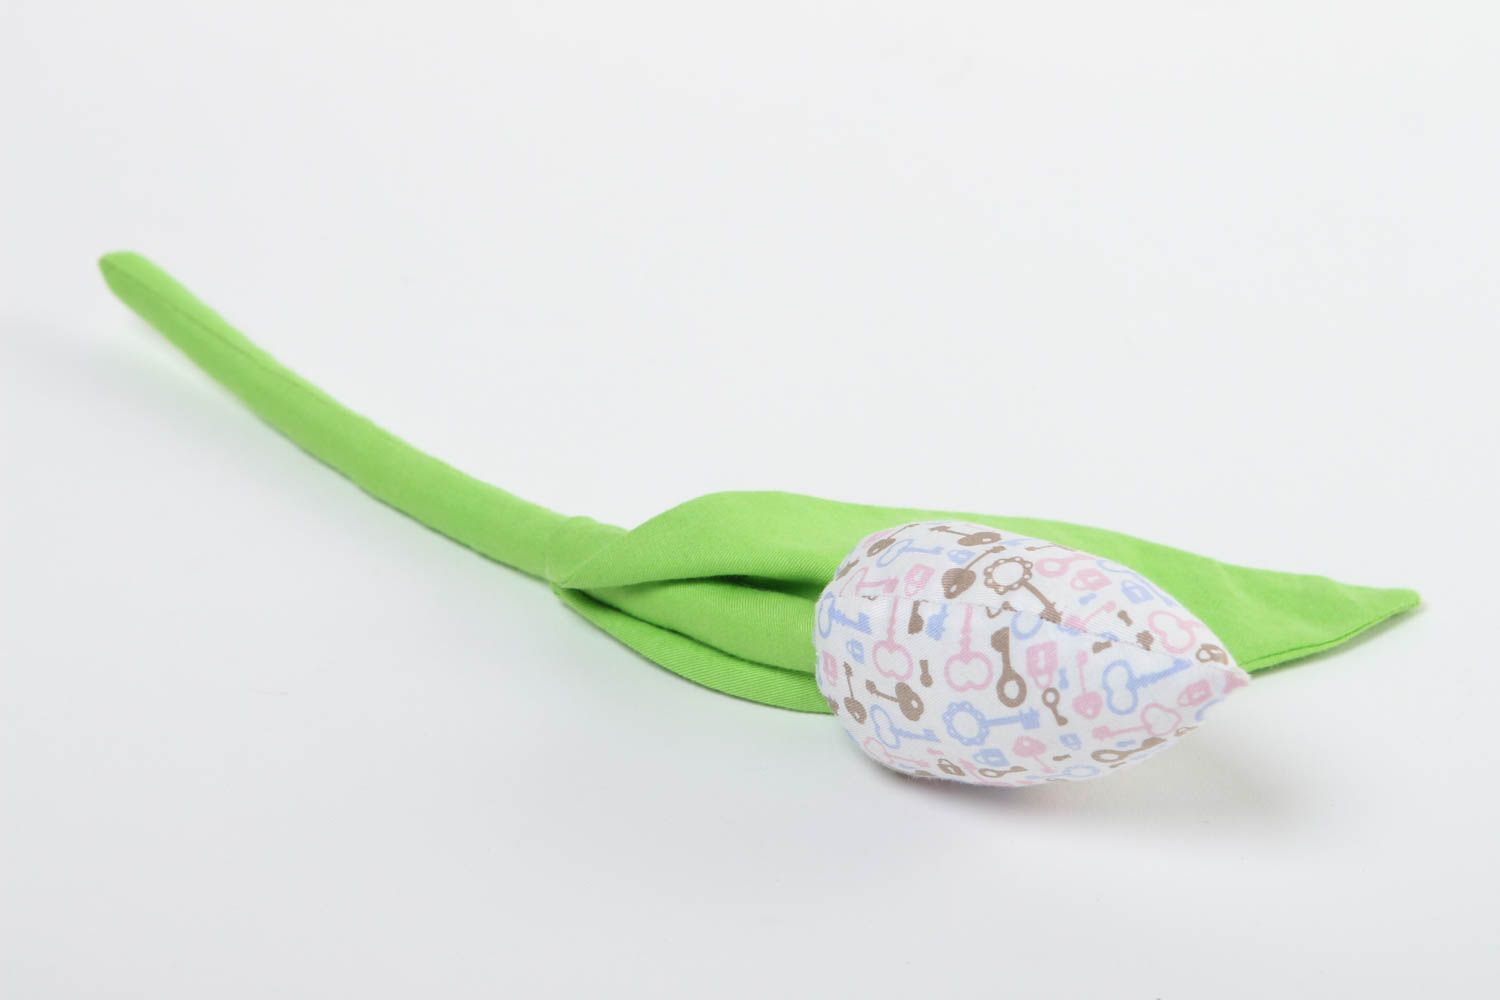 Handmade artificial flower unusual designer present cute stylish accessories photo 2